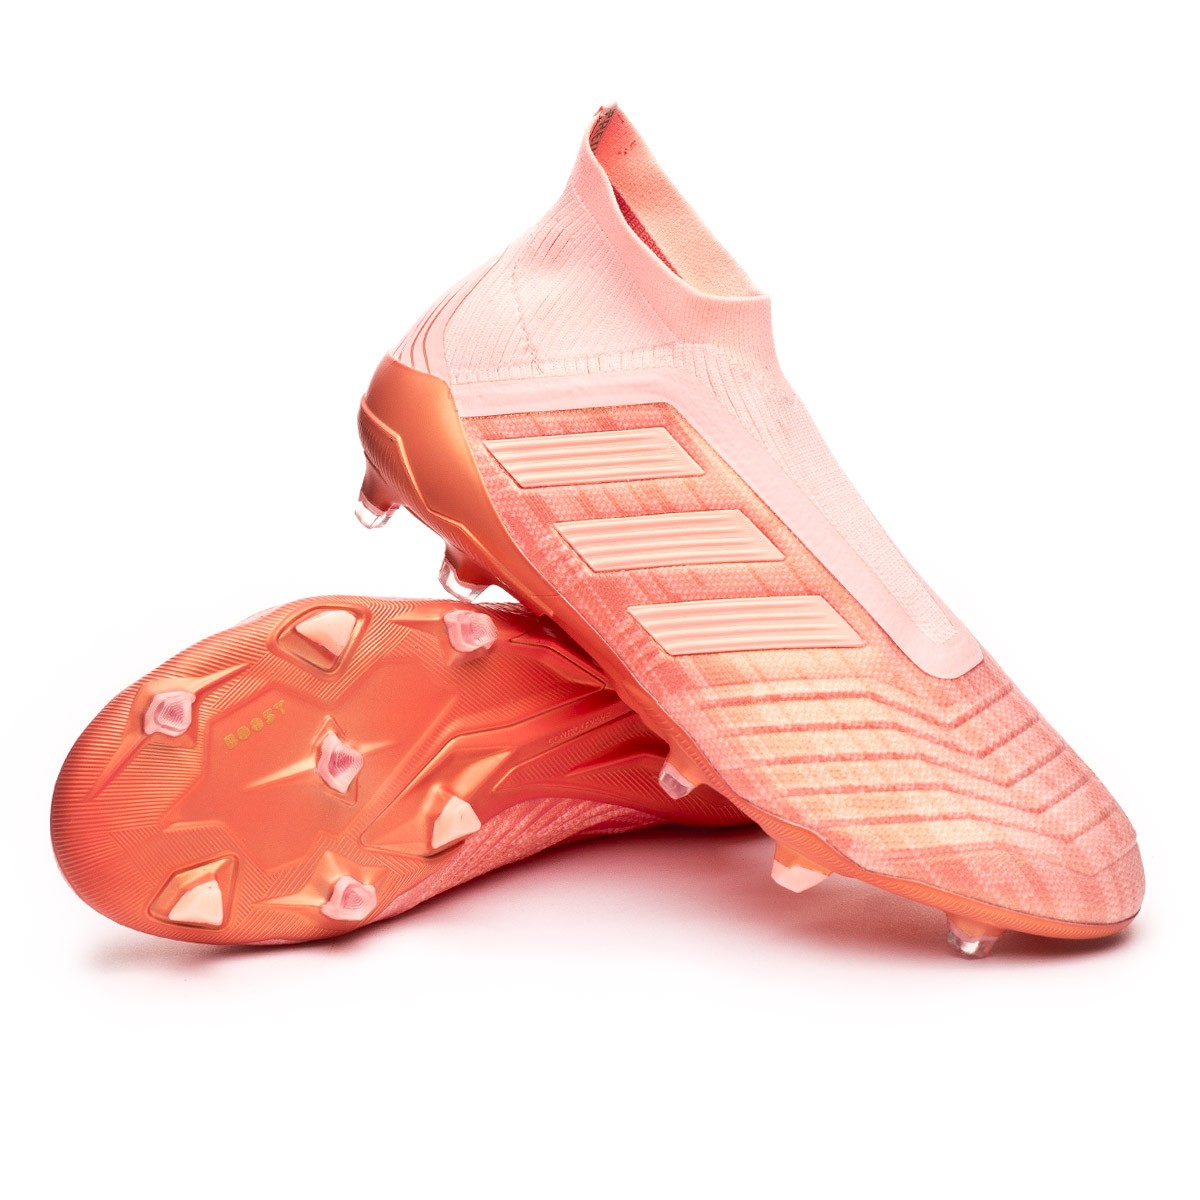 adidas predator fg pink